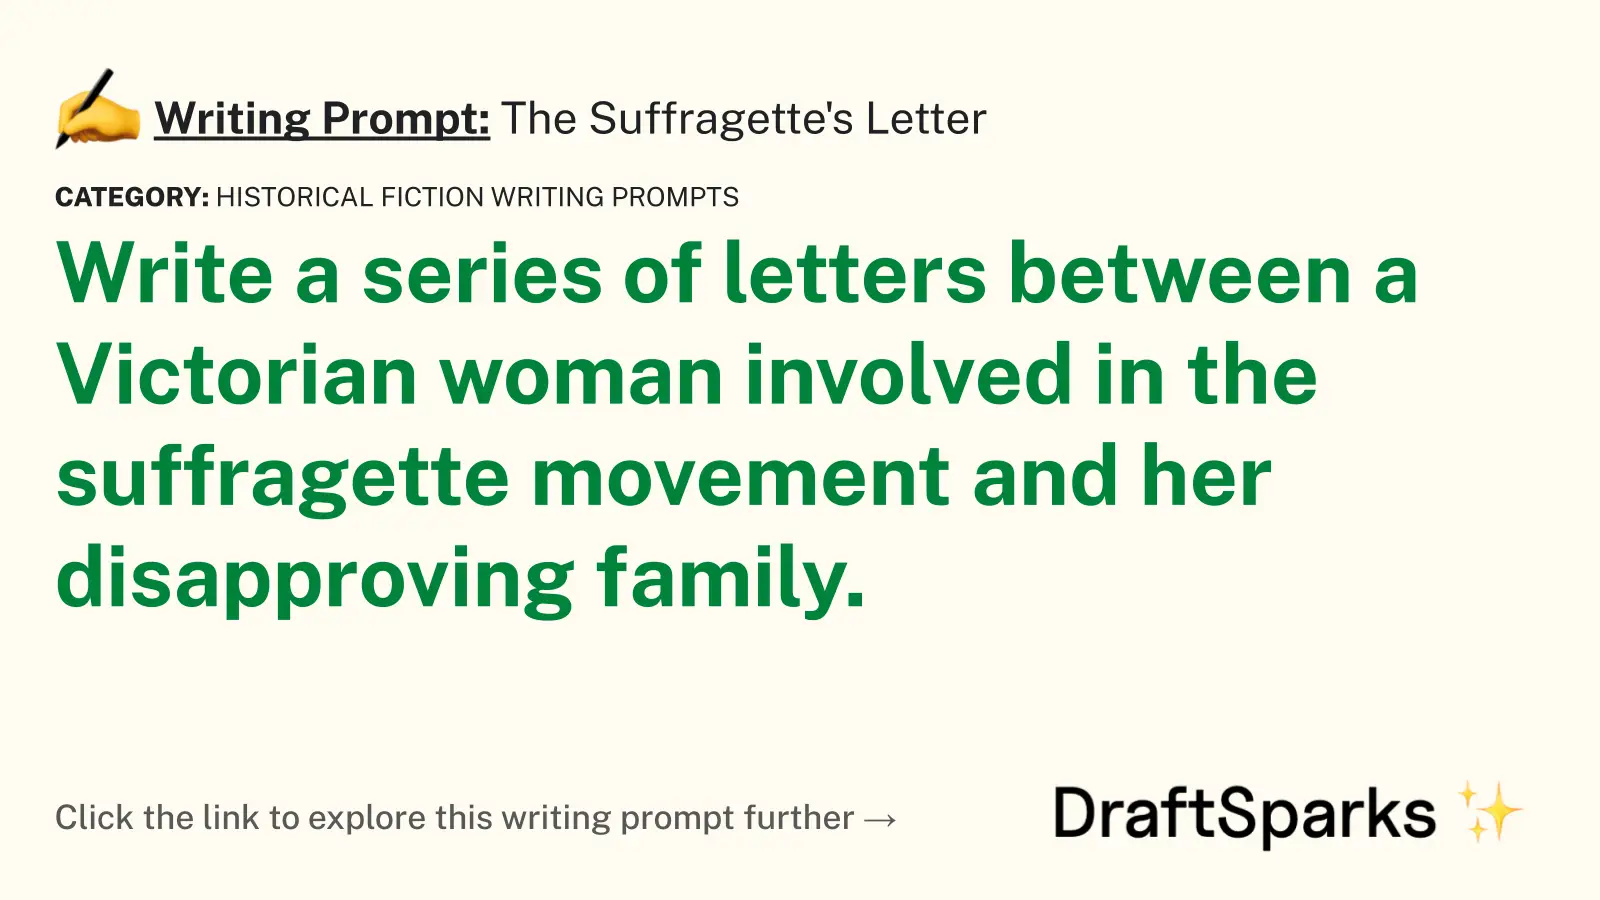 The Suffragette’s Letter